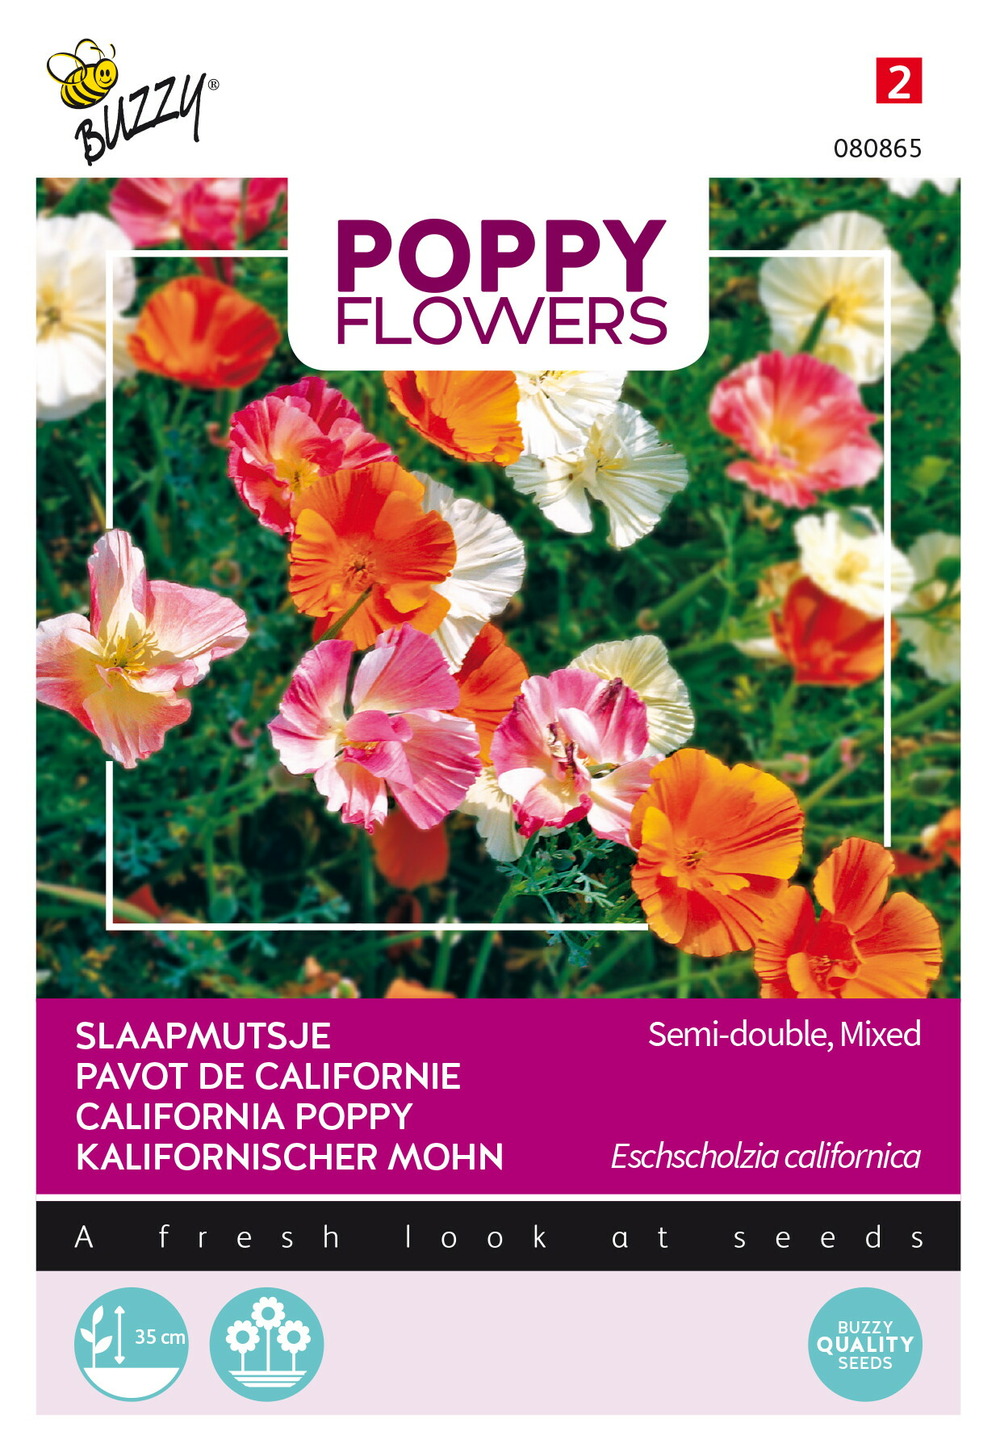 Buzzy poppy flowers eschscholtzia californica - ca. 1 gr (livraison gratuite)